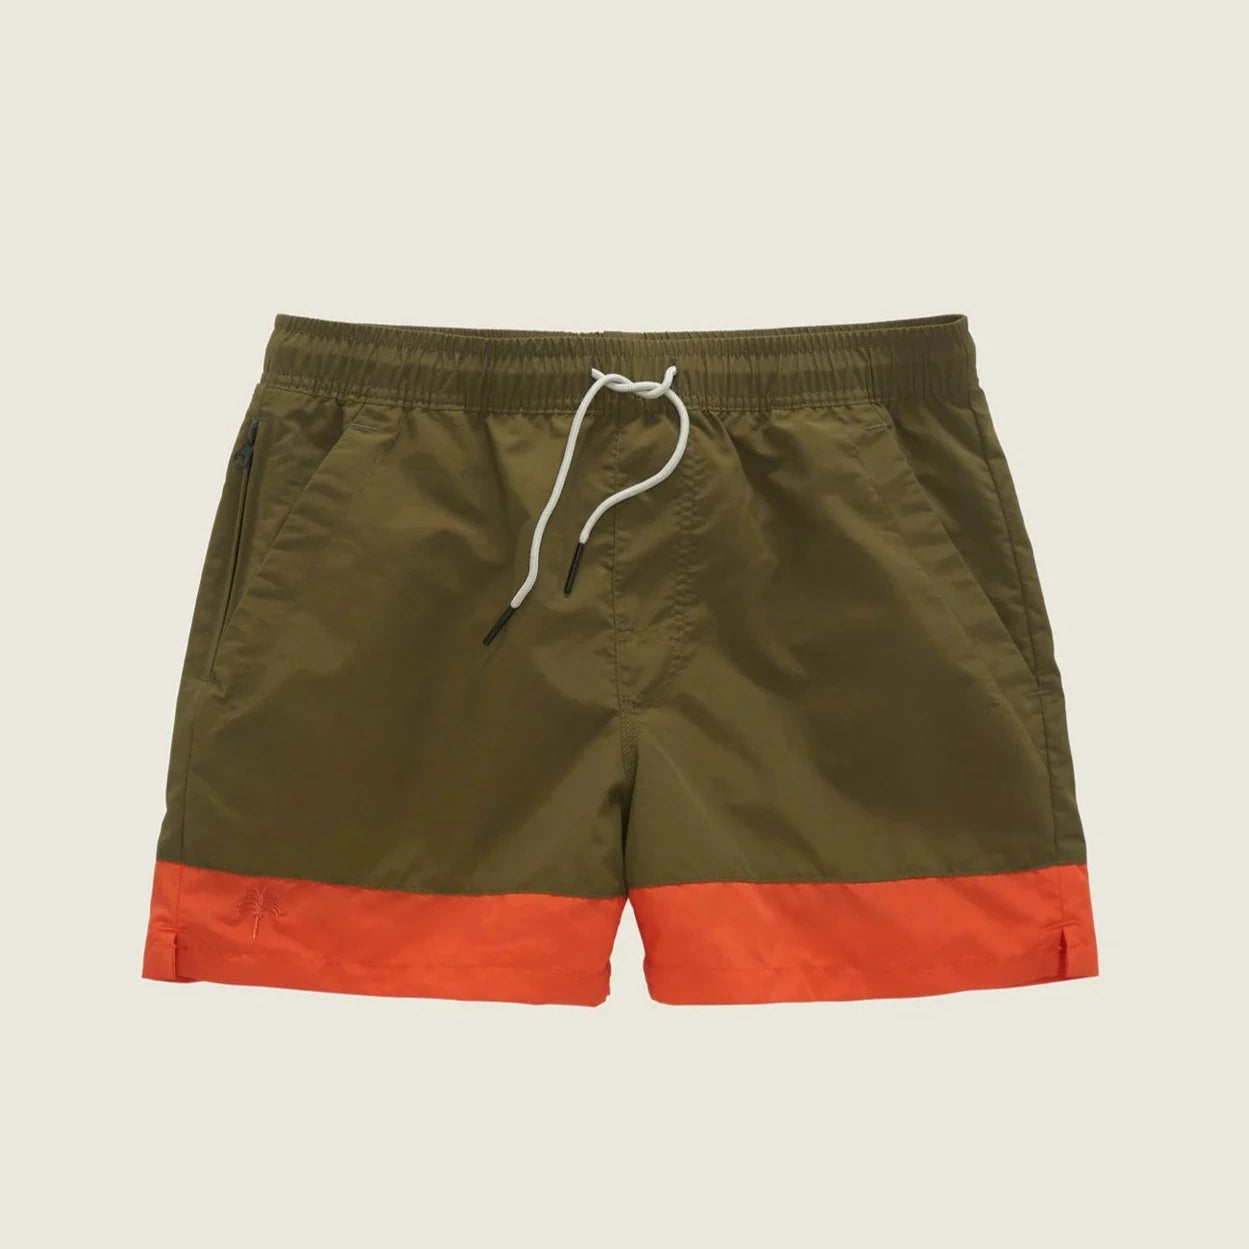 OAS Orange Stripes Swim Shorts - Costume Mare - Neverland Firenze